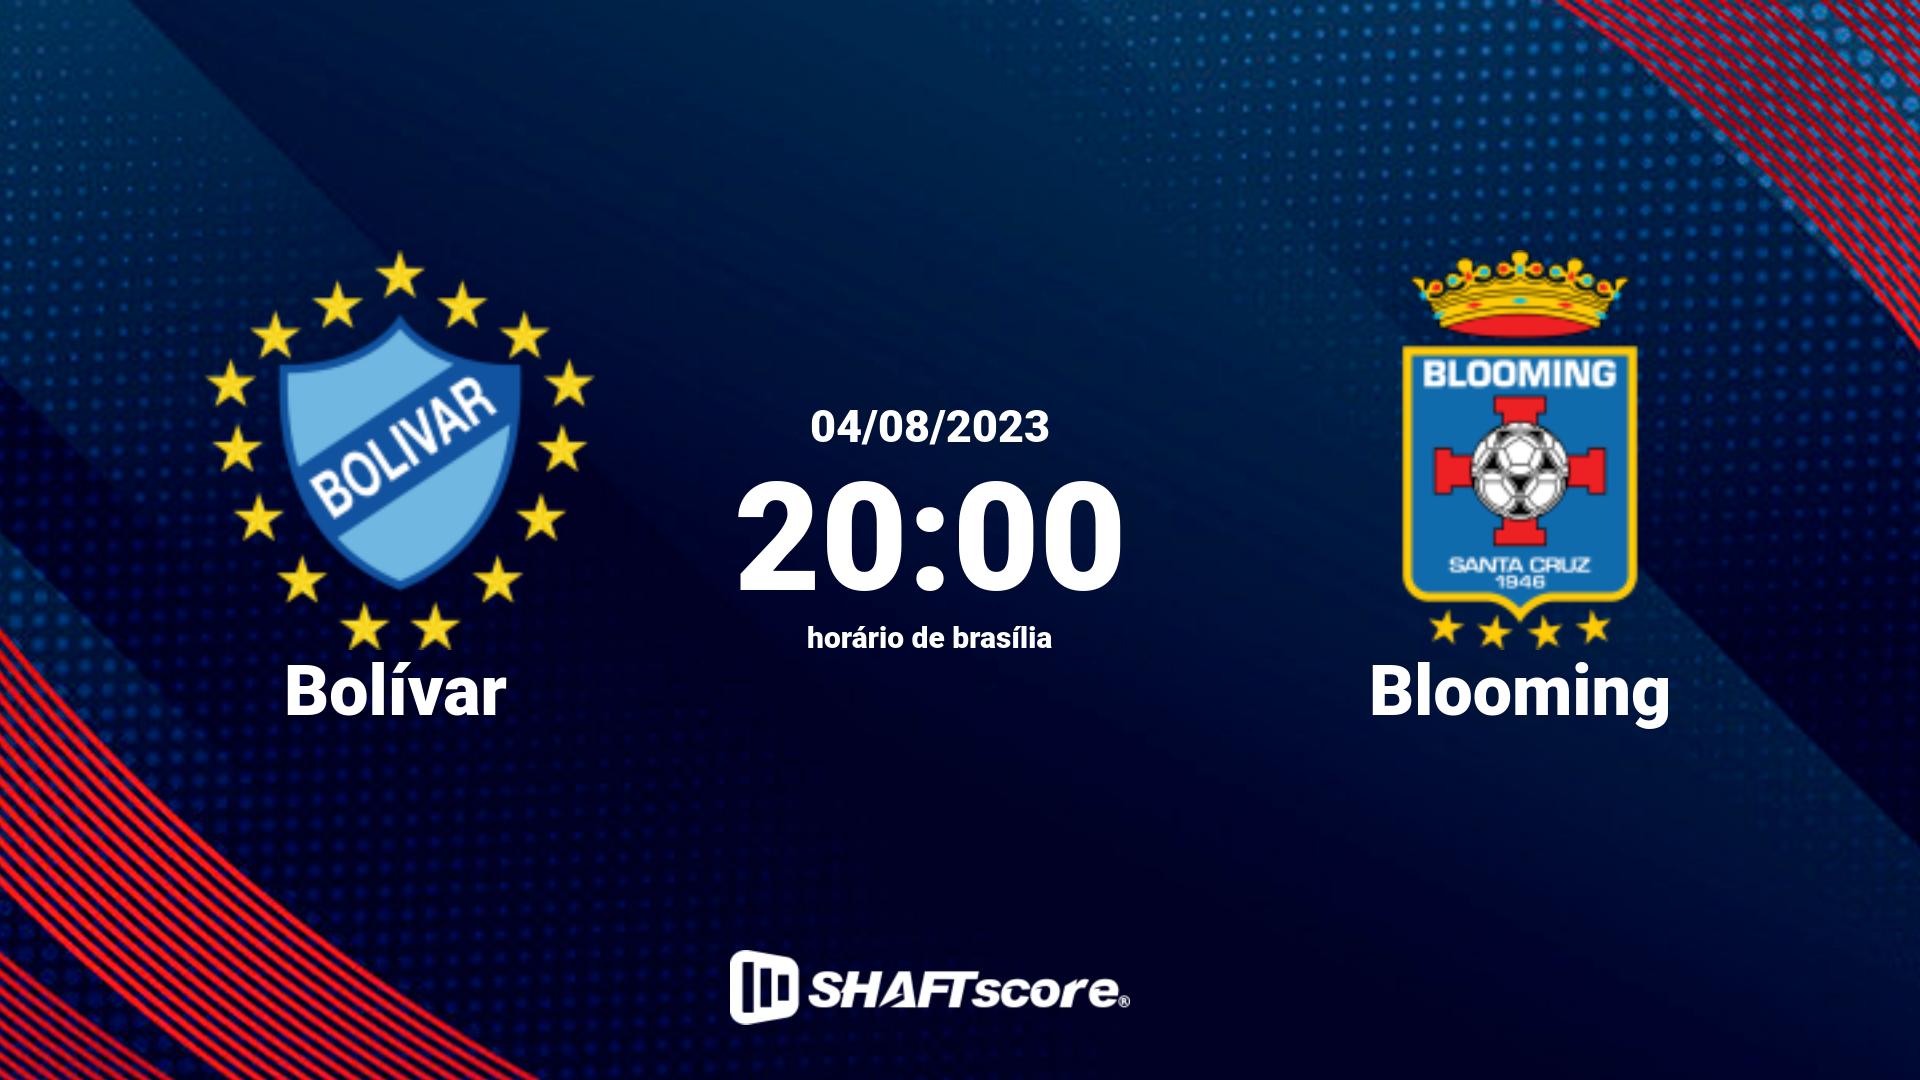 Estatísticas do jogo Bolívar vs Blooming 04.08 20:00